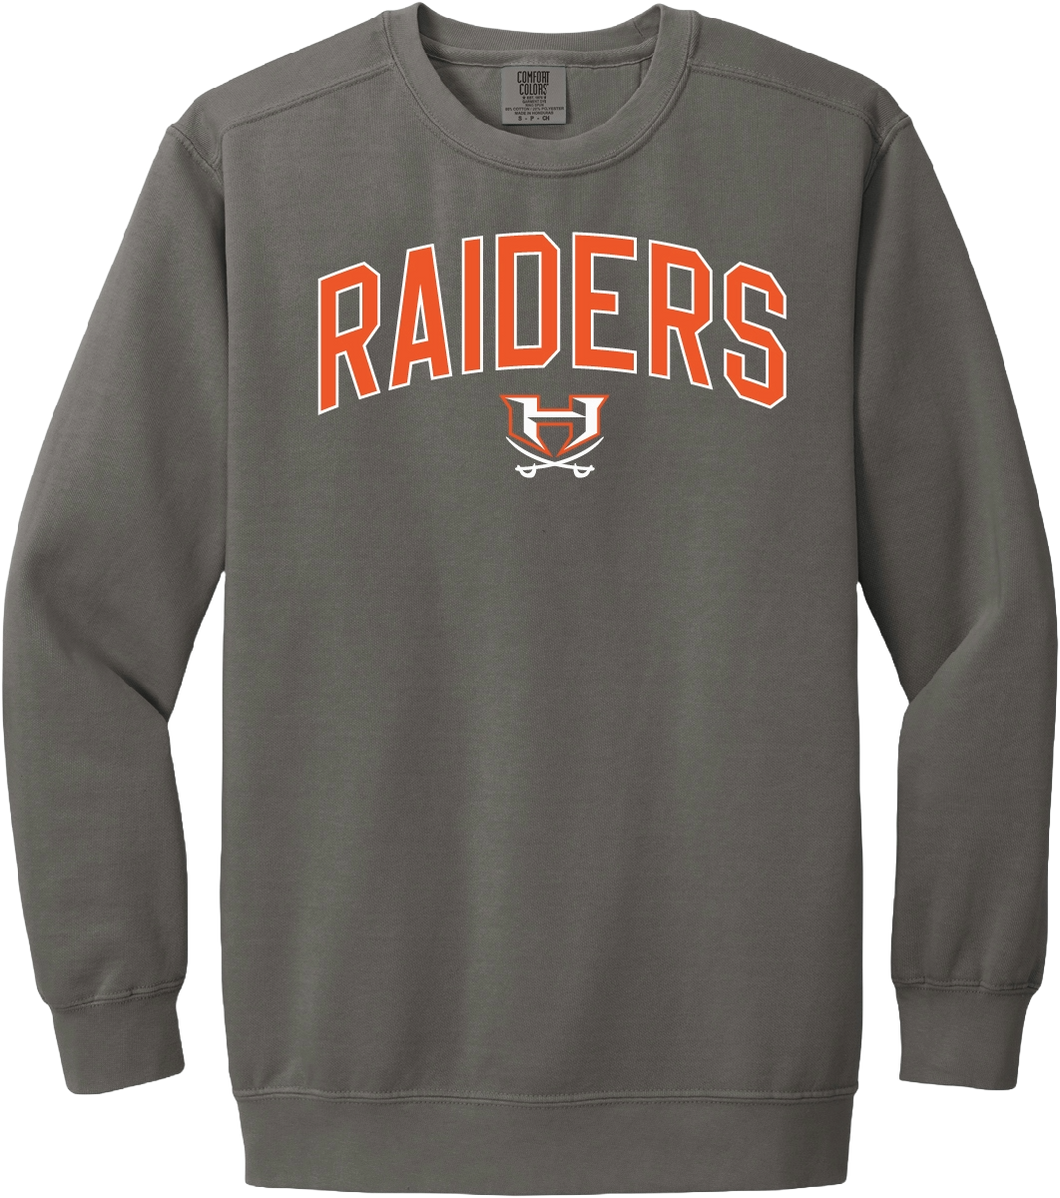 Raiders Comfort Colors Sweatshirt (Grey)